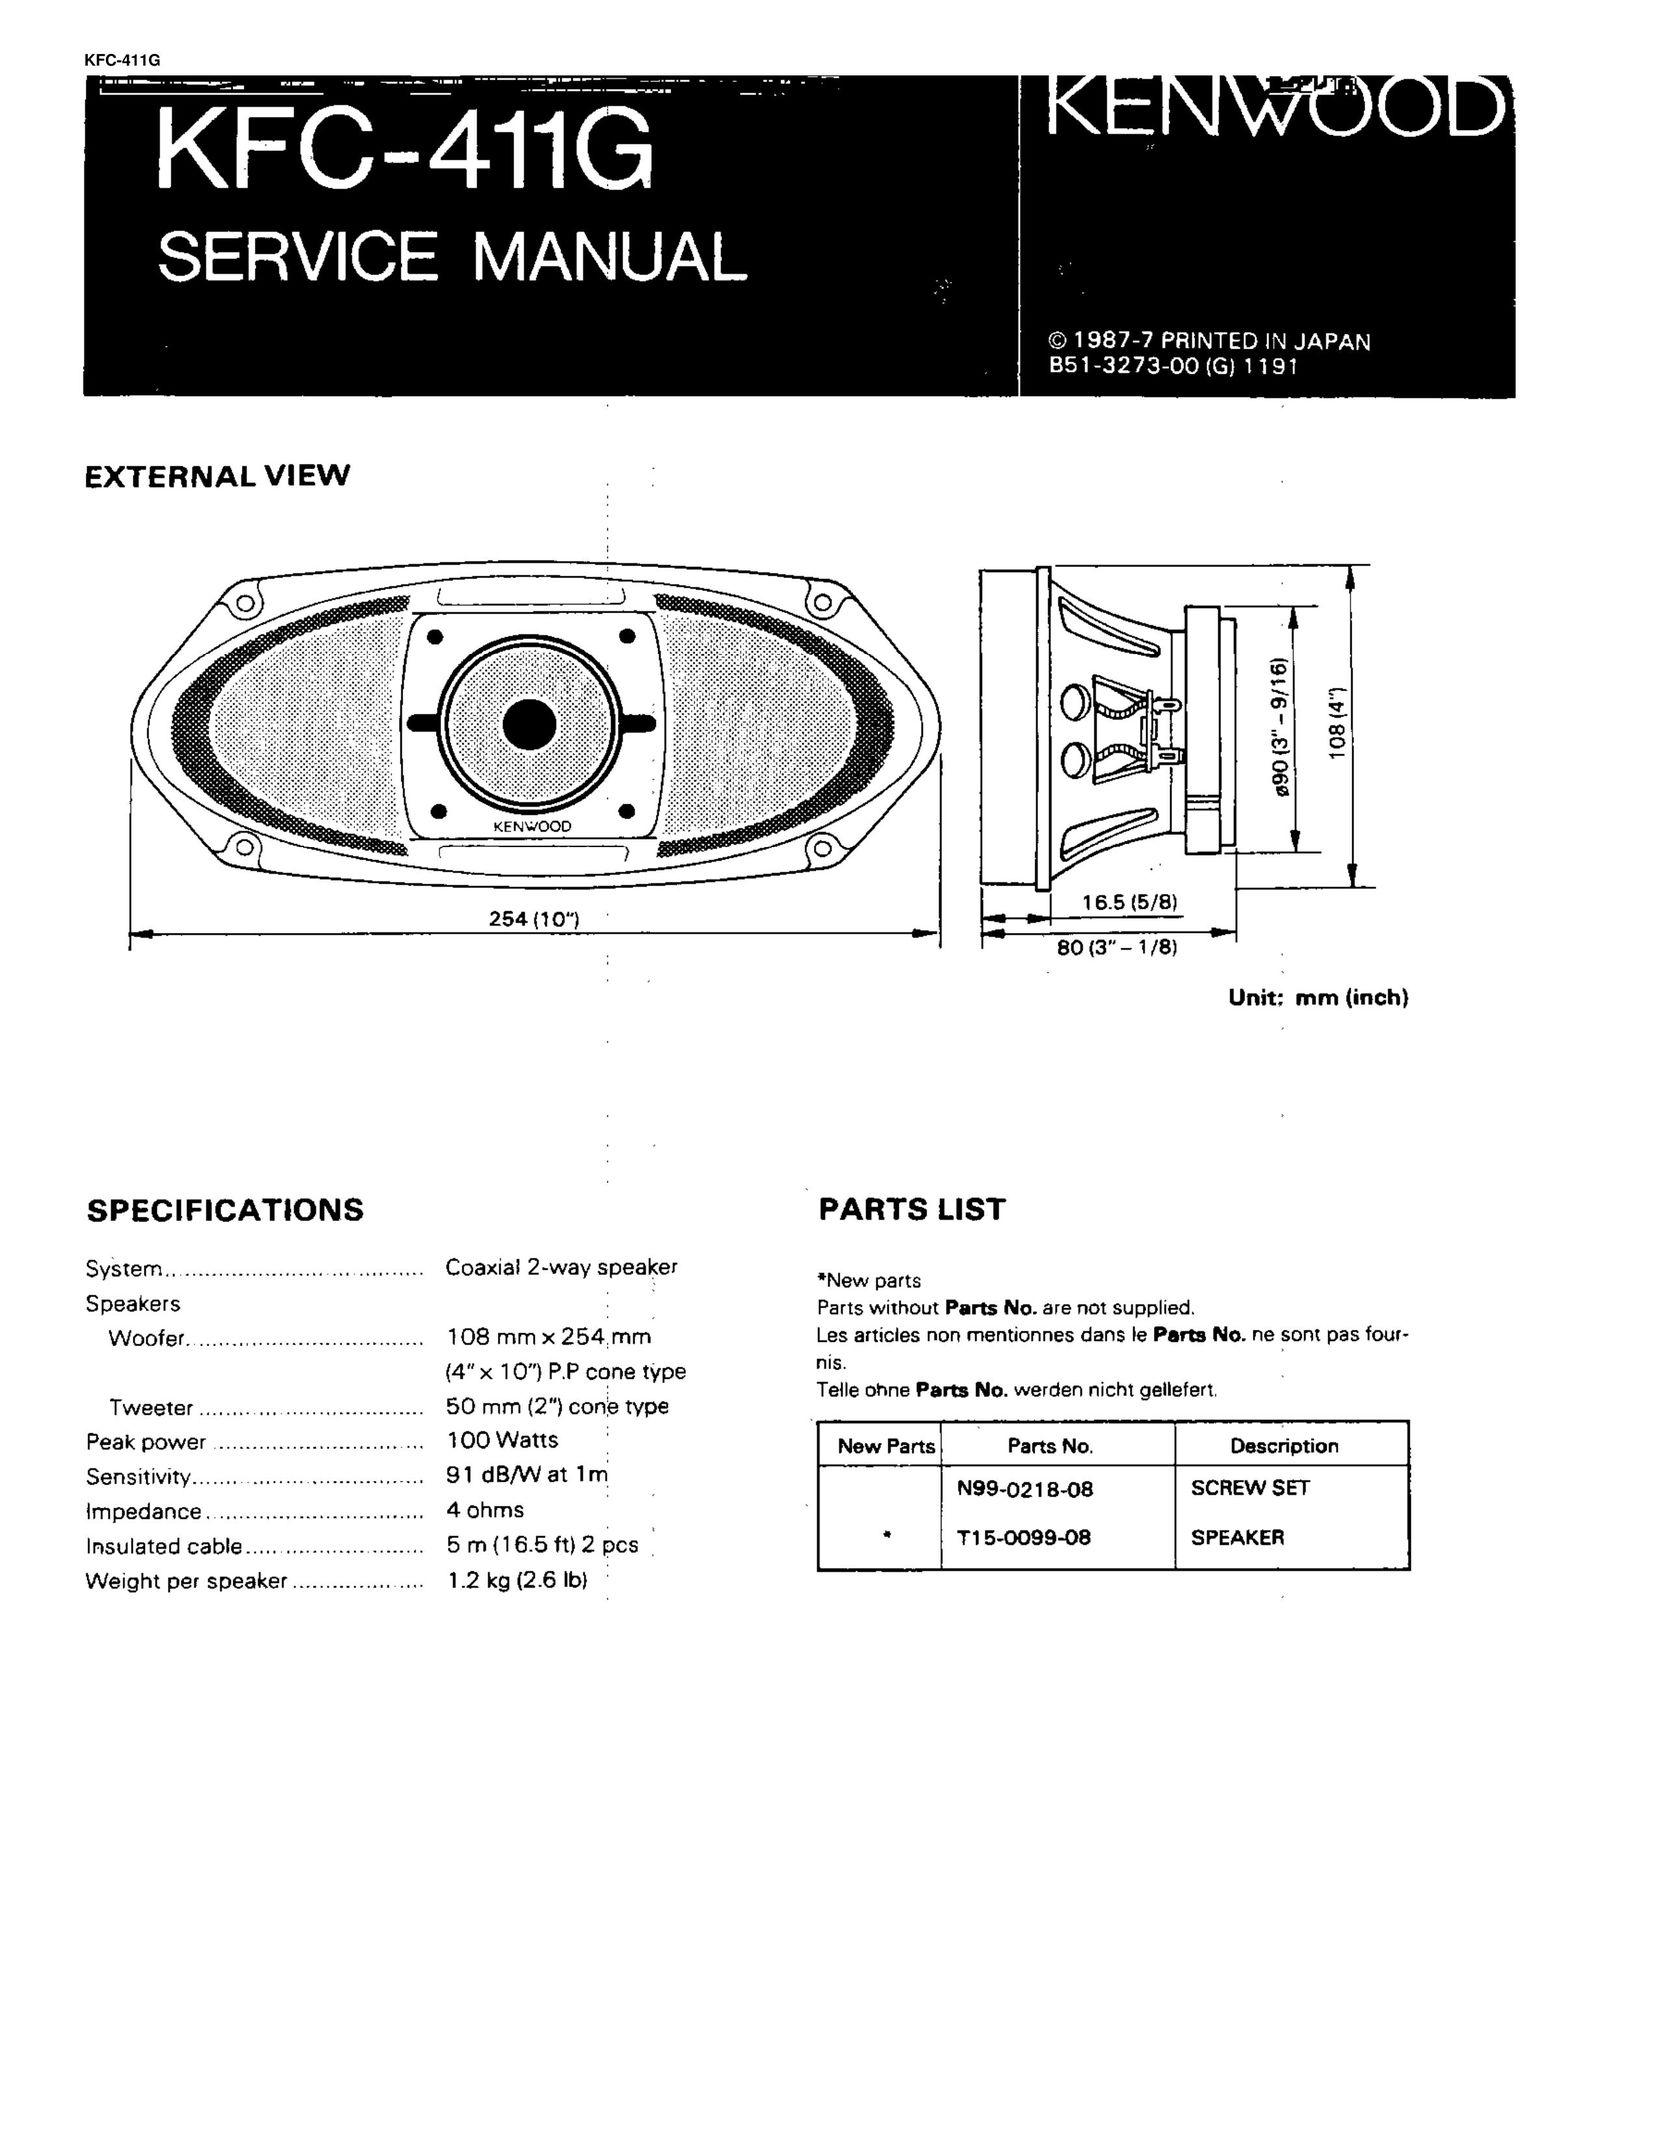 Kenwood KFC-411G Car Speaker User Manual